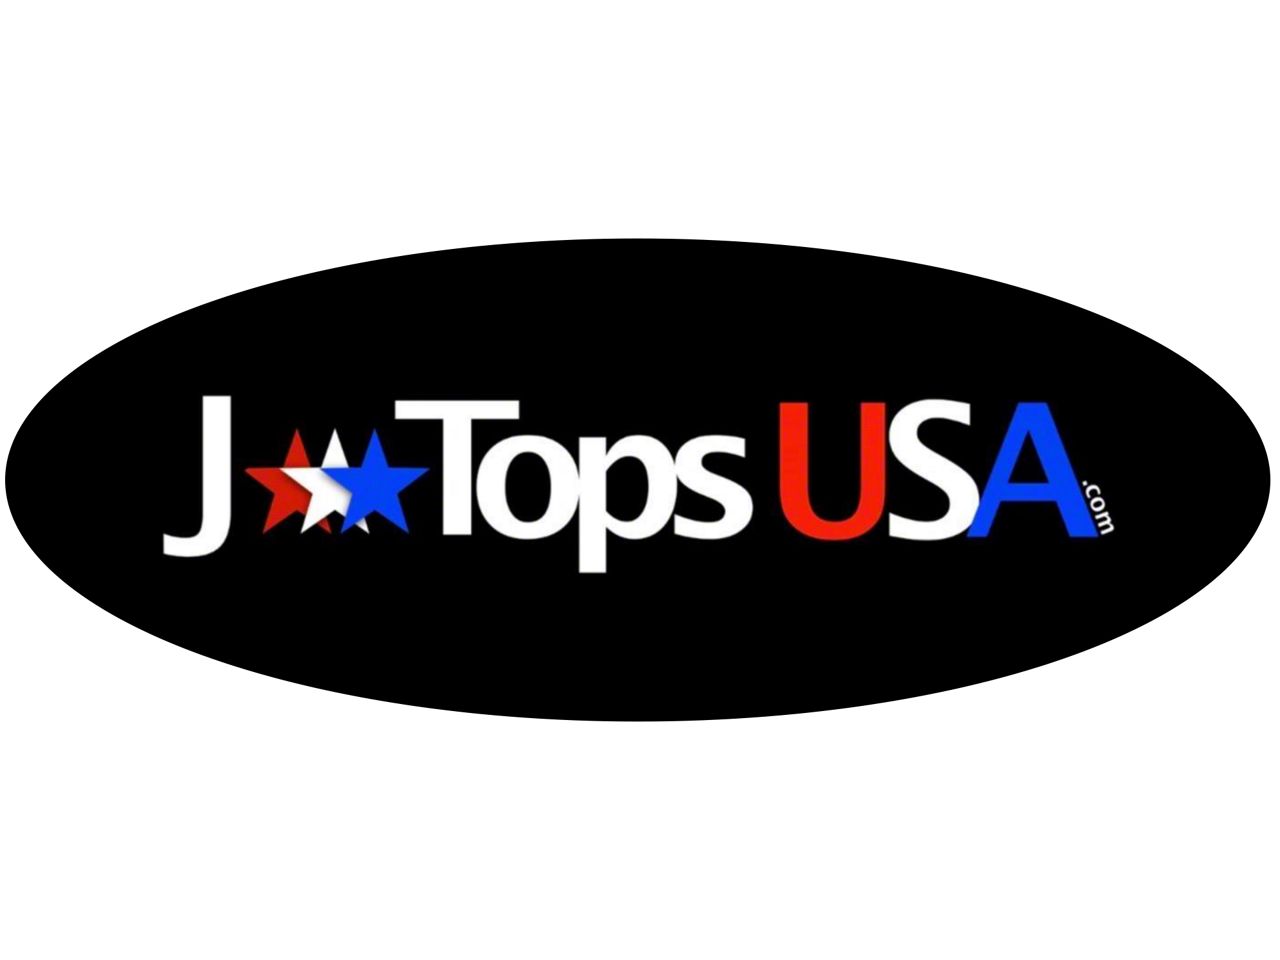 J Tops USA Parts